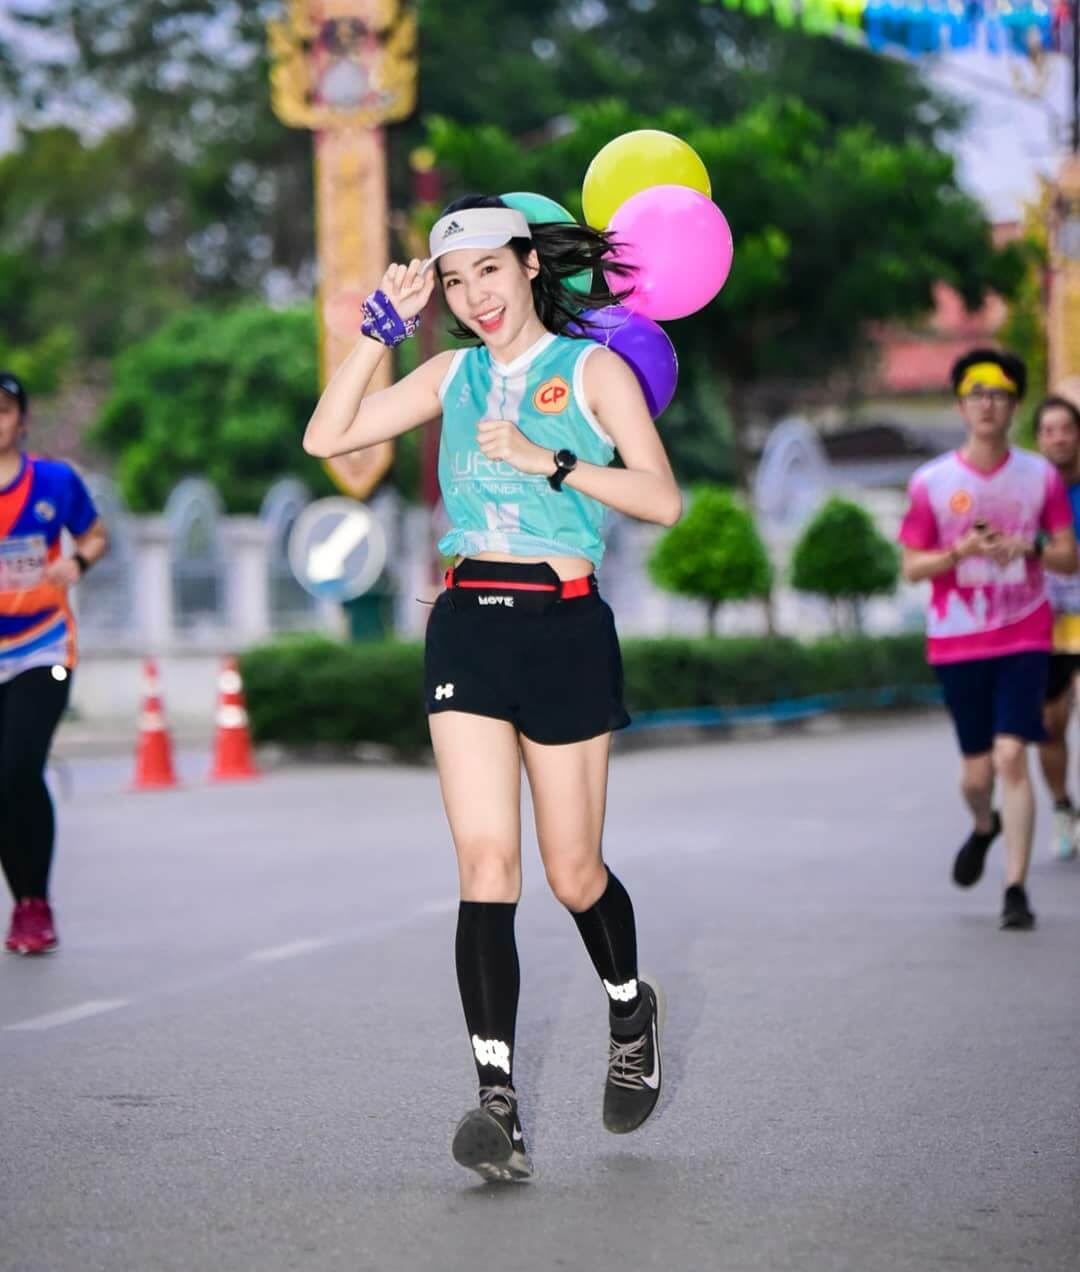 10 Potret Whichwara Wirasapkun, Atlet Lari dan Selebgram Cantik Asal Thailand